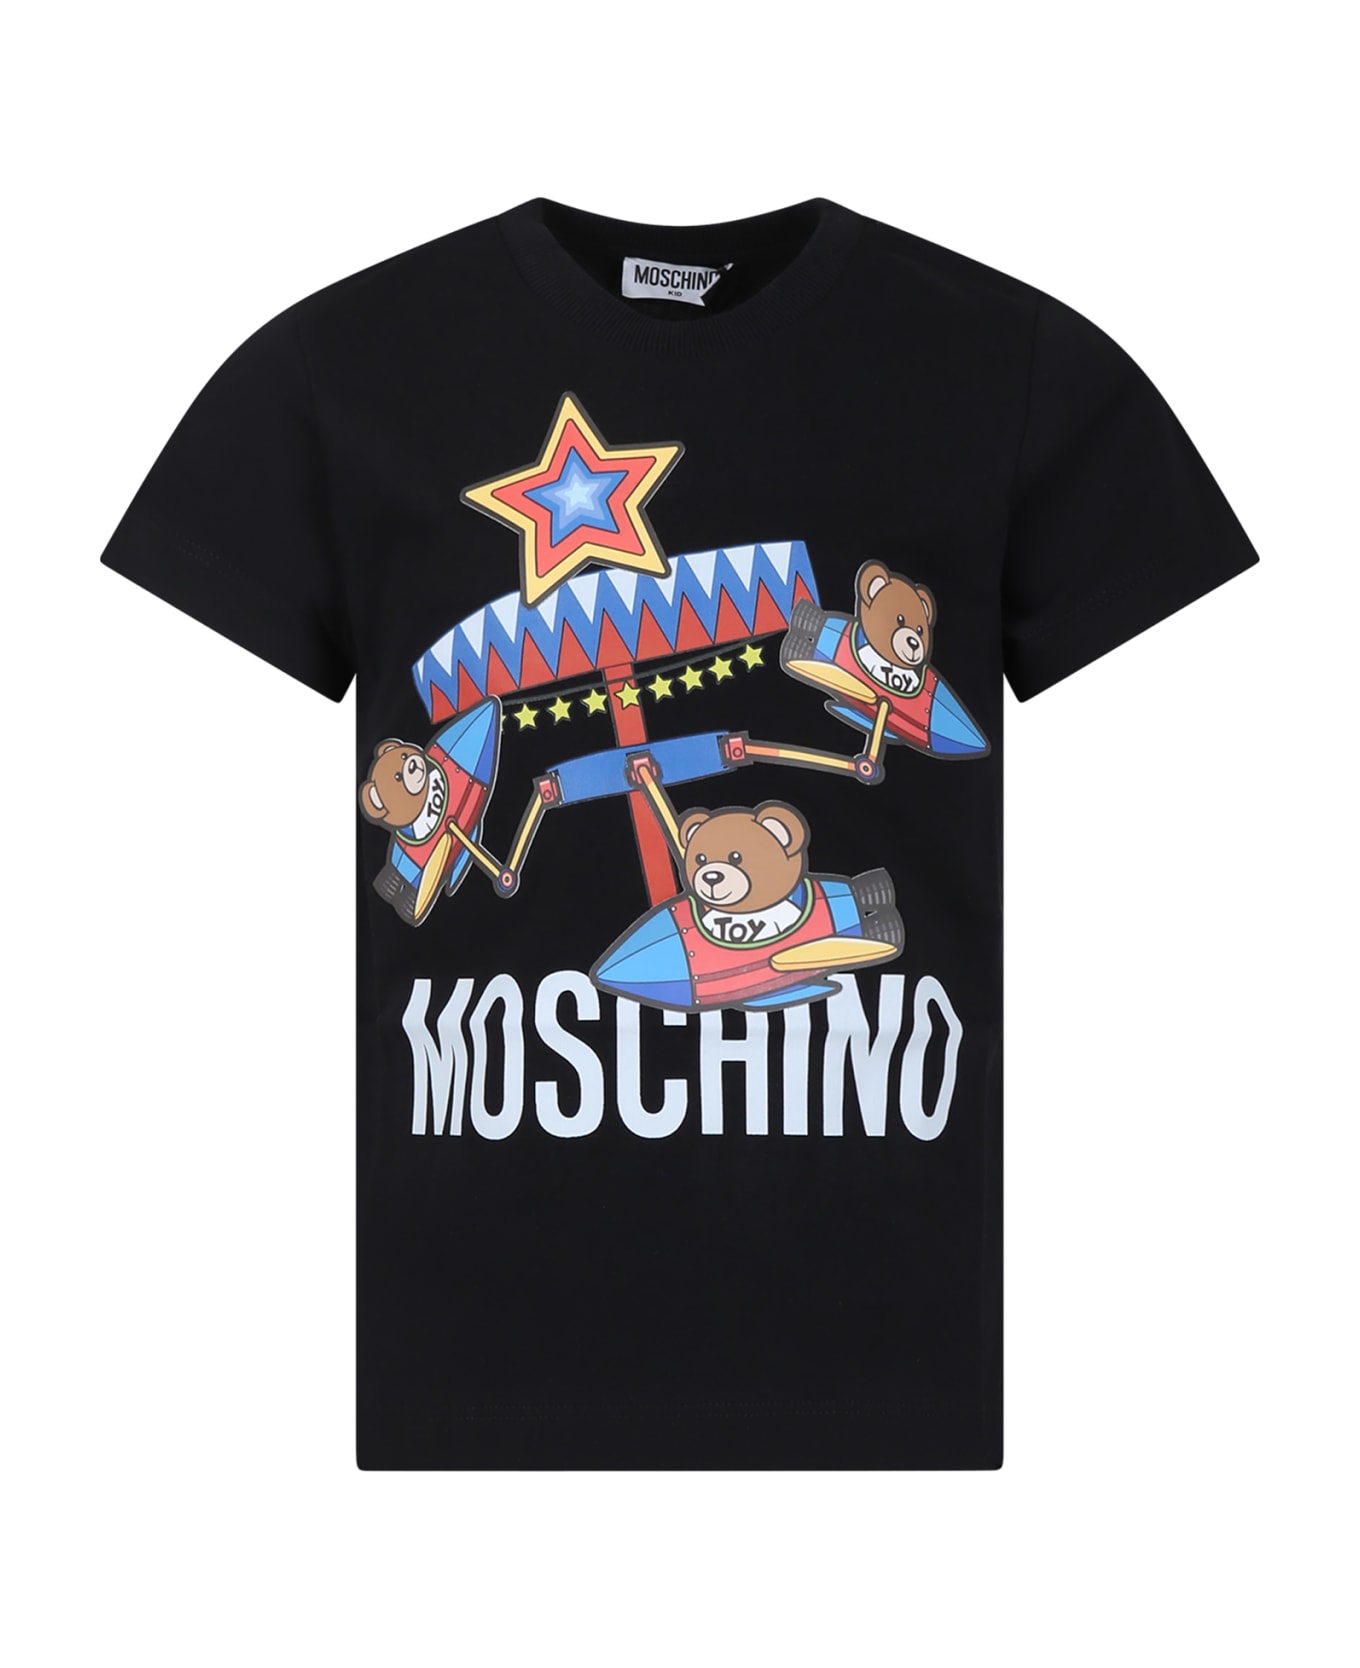 Moschino Black T-shirt For Kids With Teddy Bears Print - Black